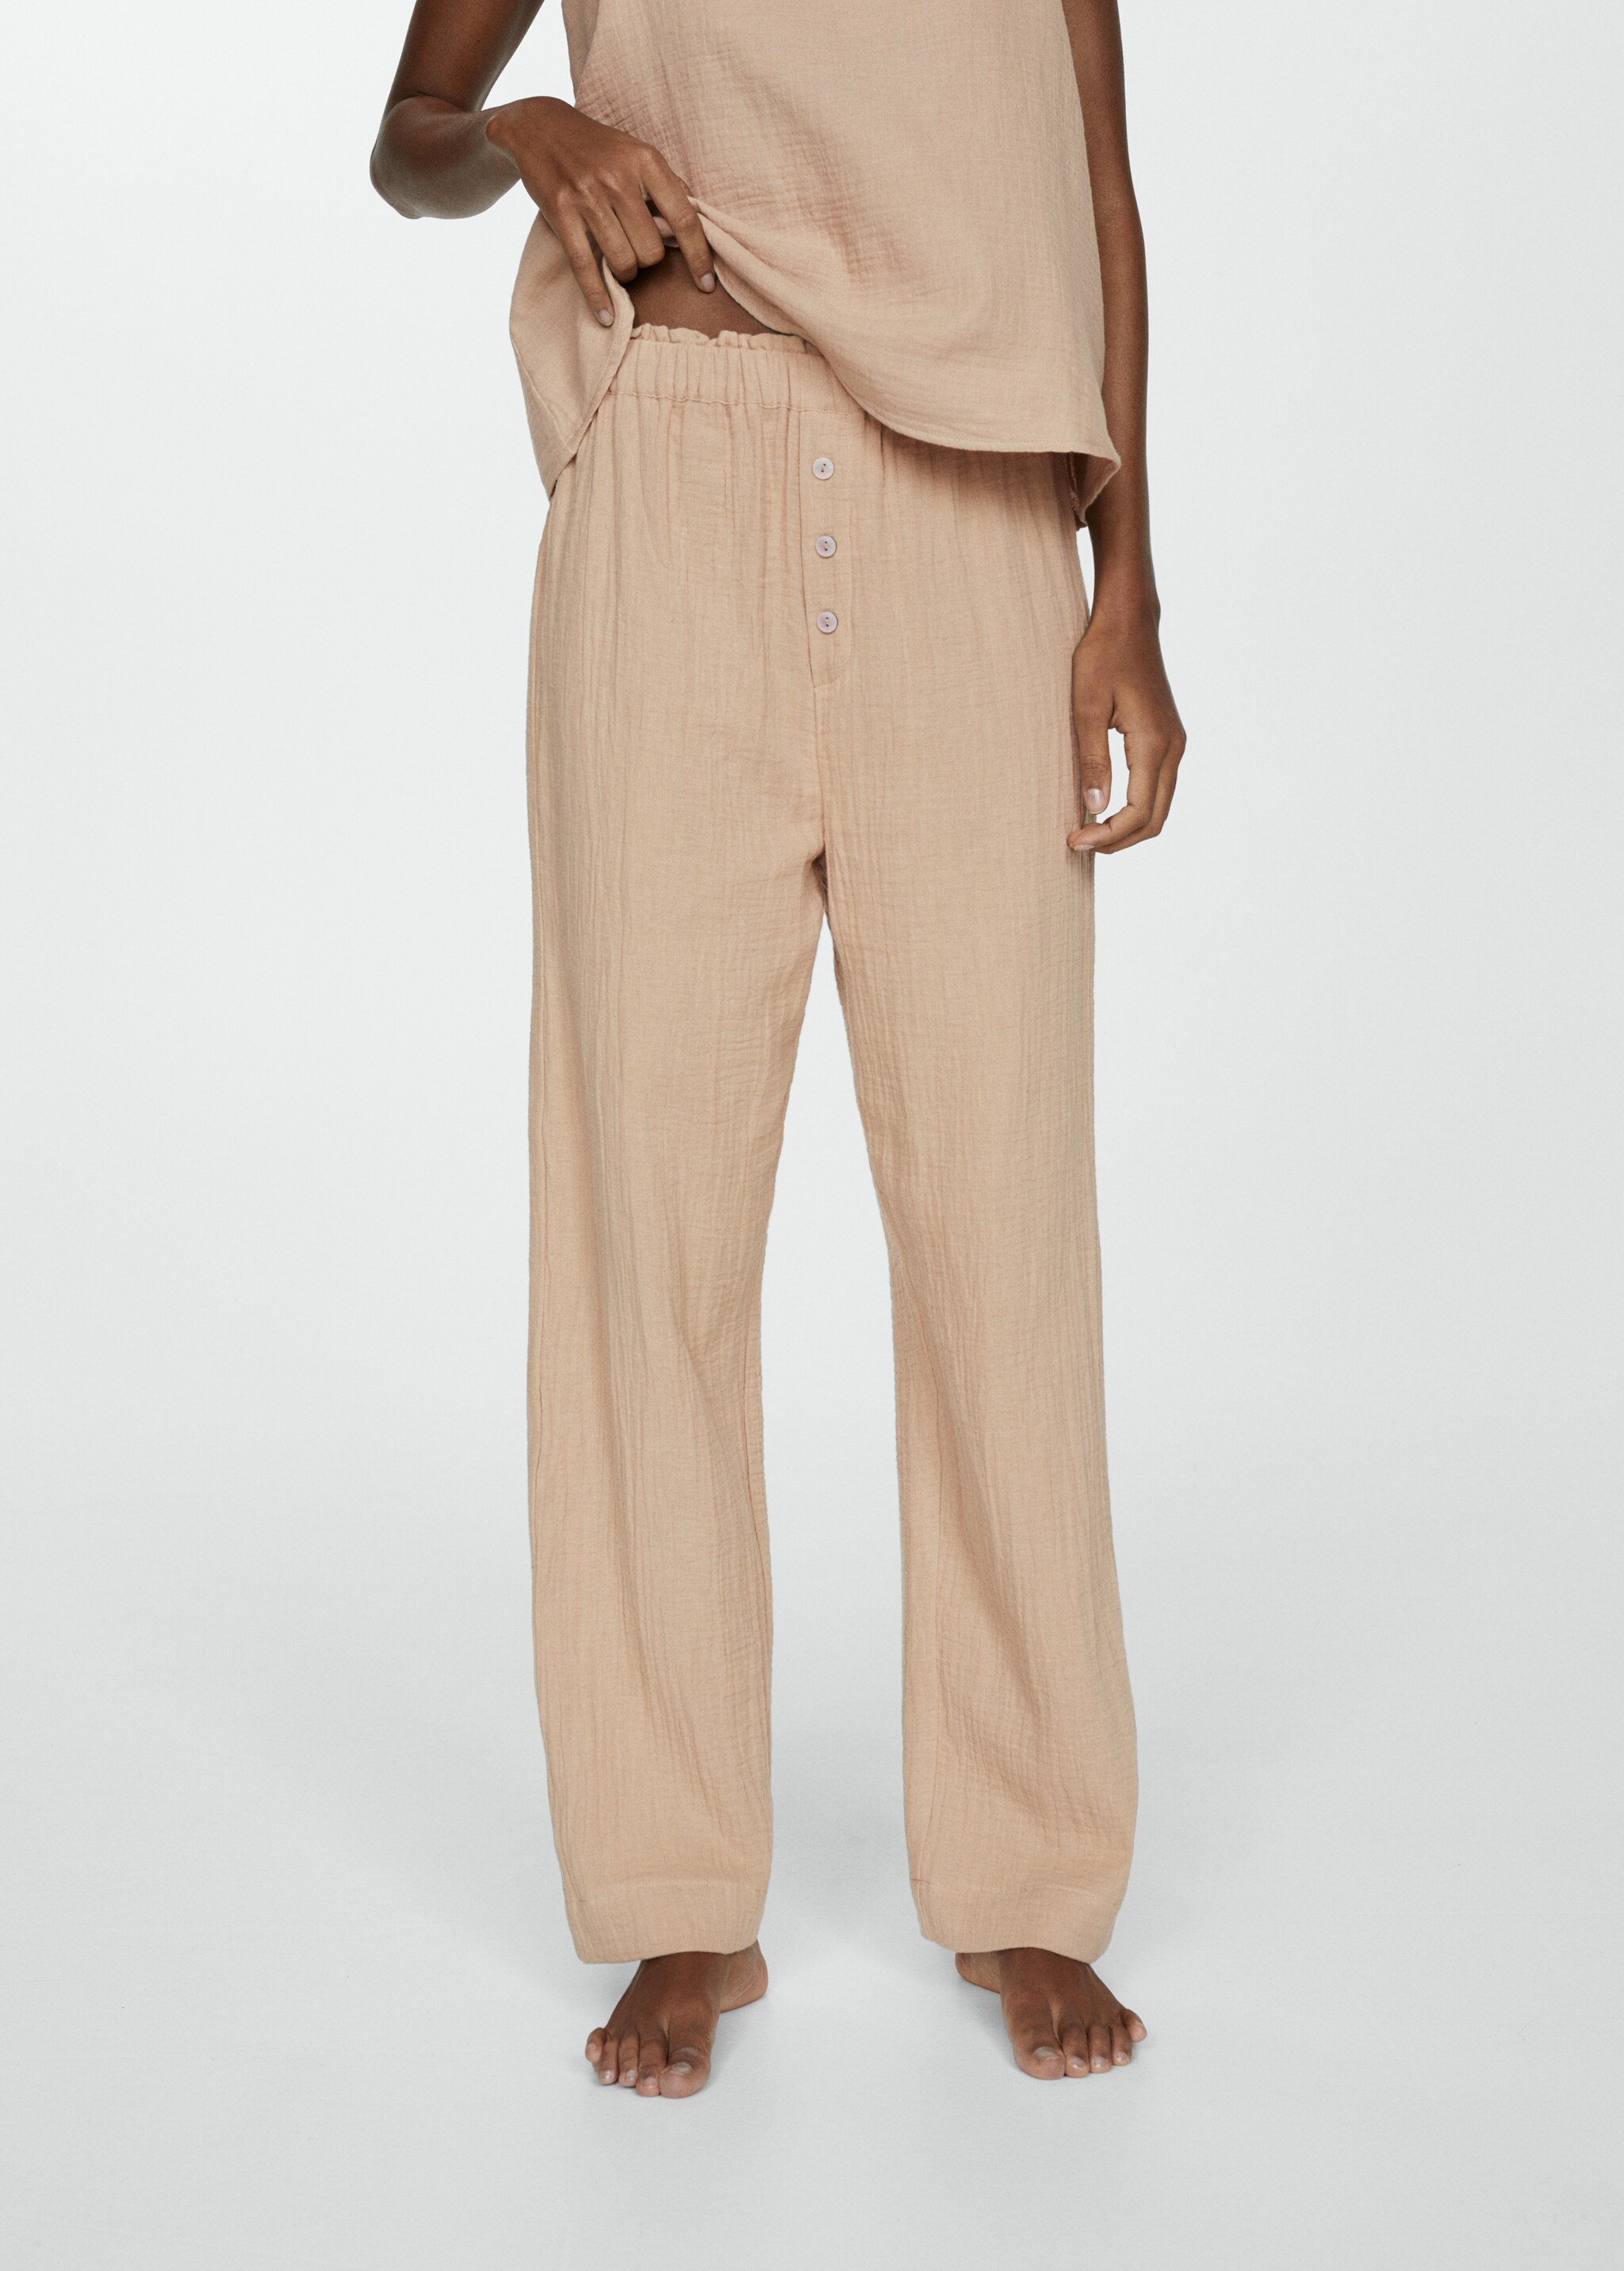 Pantalón pijama gasa de algodón - Plano medio